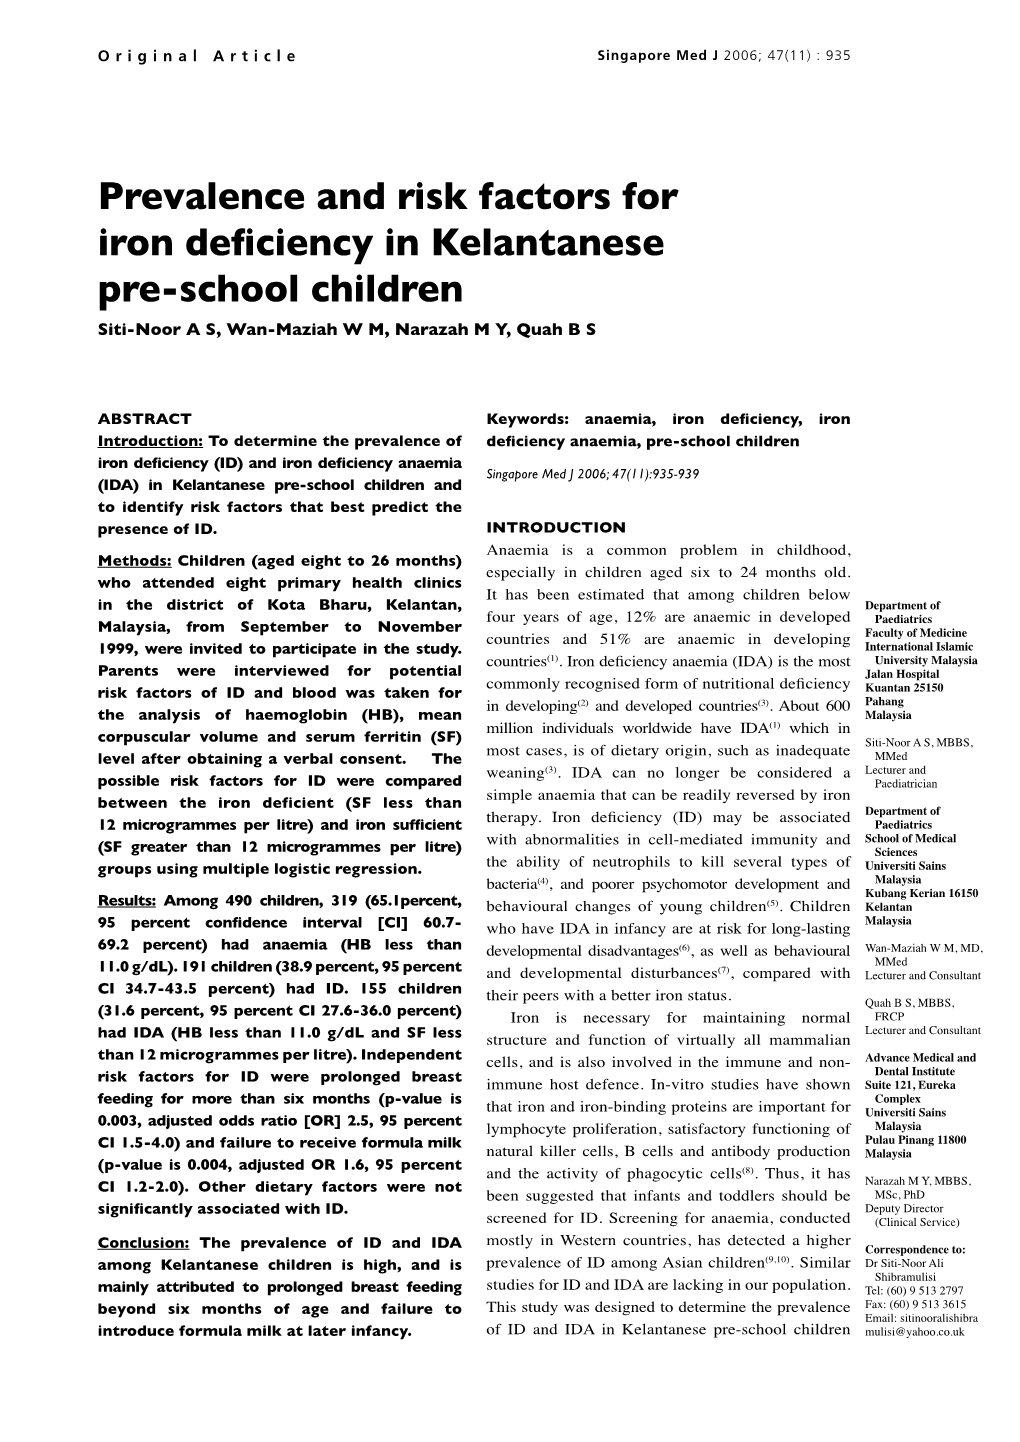 Prevalence and Risk Factors for Iron Deficiency in Kelantanese Pre-School Children Siti-Noor a S, Wan-Maziah W M, Narazah M Y, Quah B S